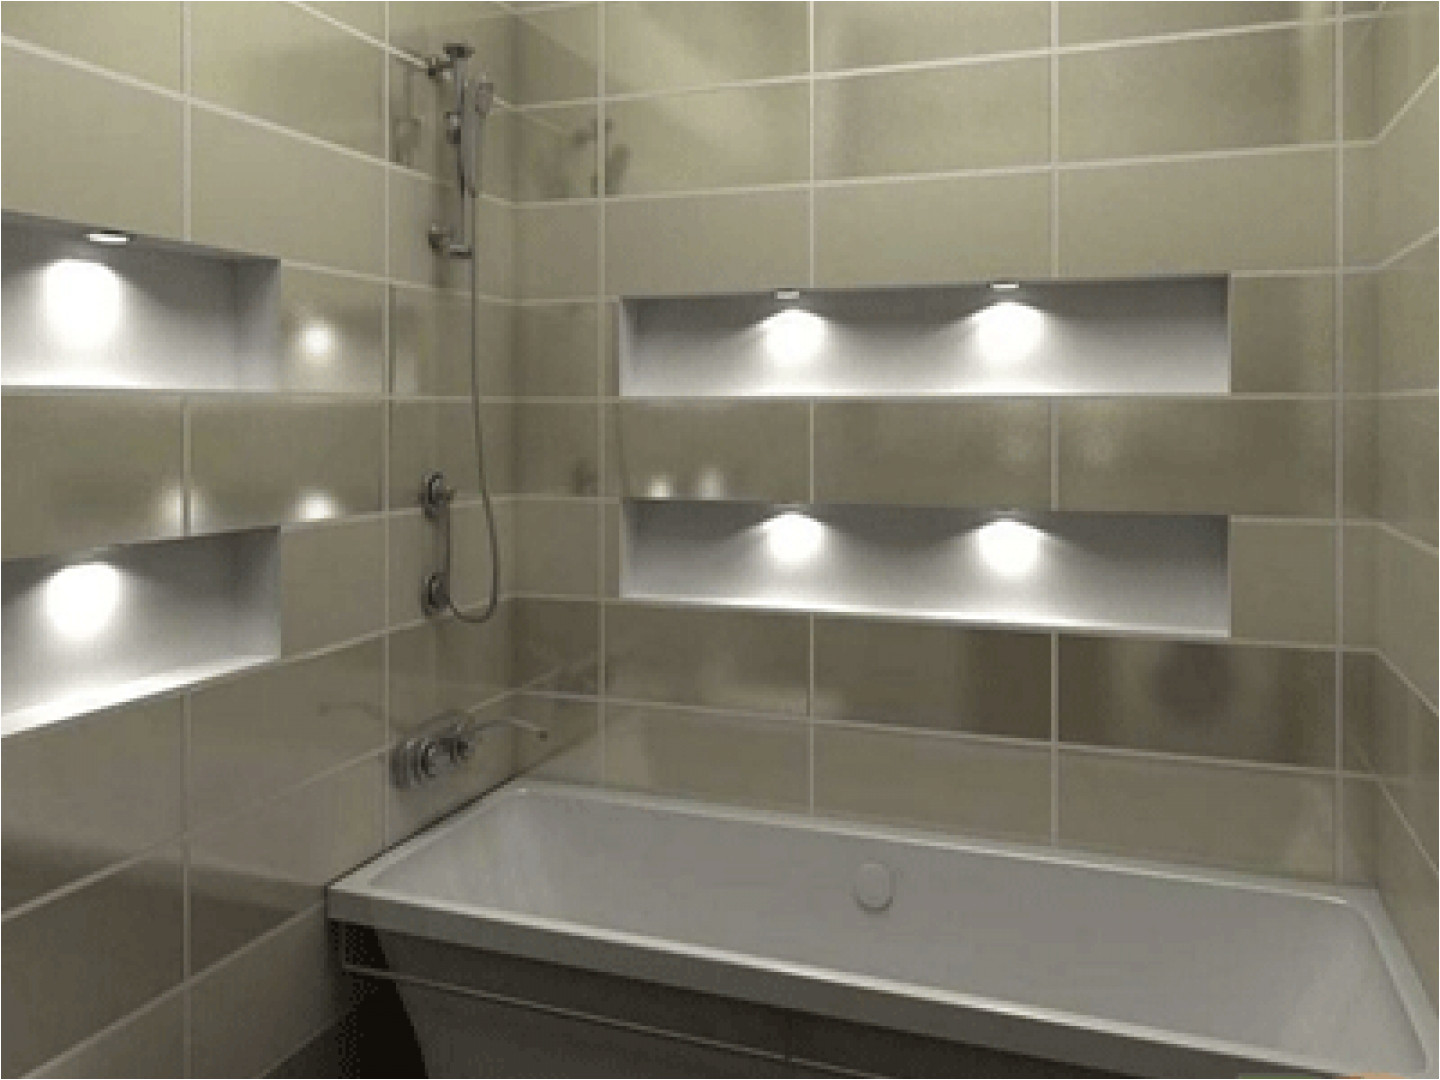 image of small bathroom tile ideas